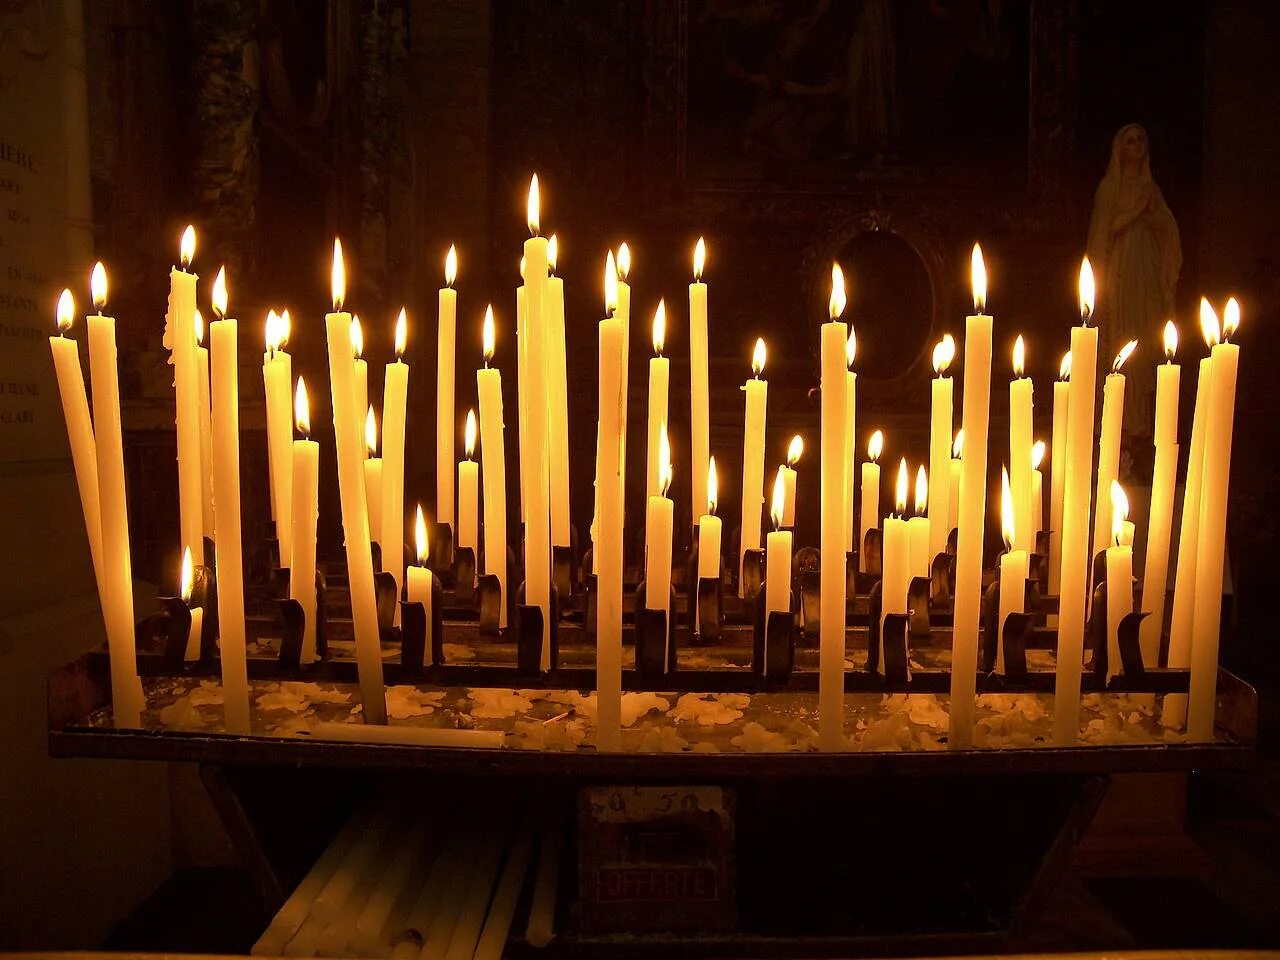 Церковные свечи. Свечи в храме. Горящие свечи в храме. Свечи в православном храме. В церкви горят свечи